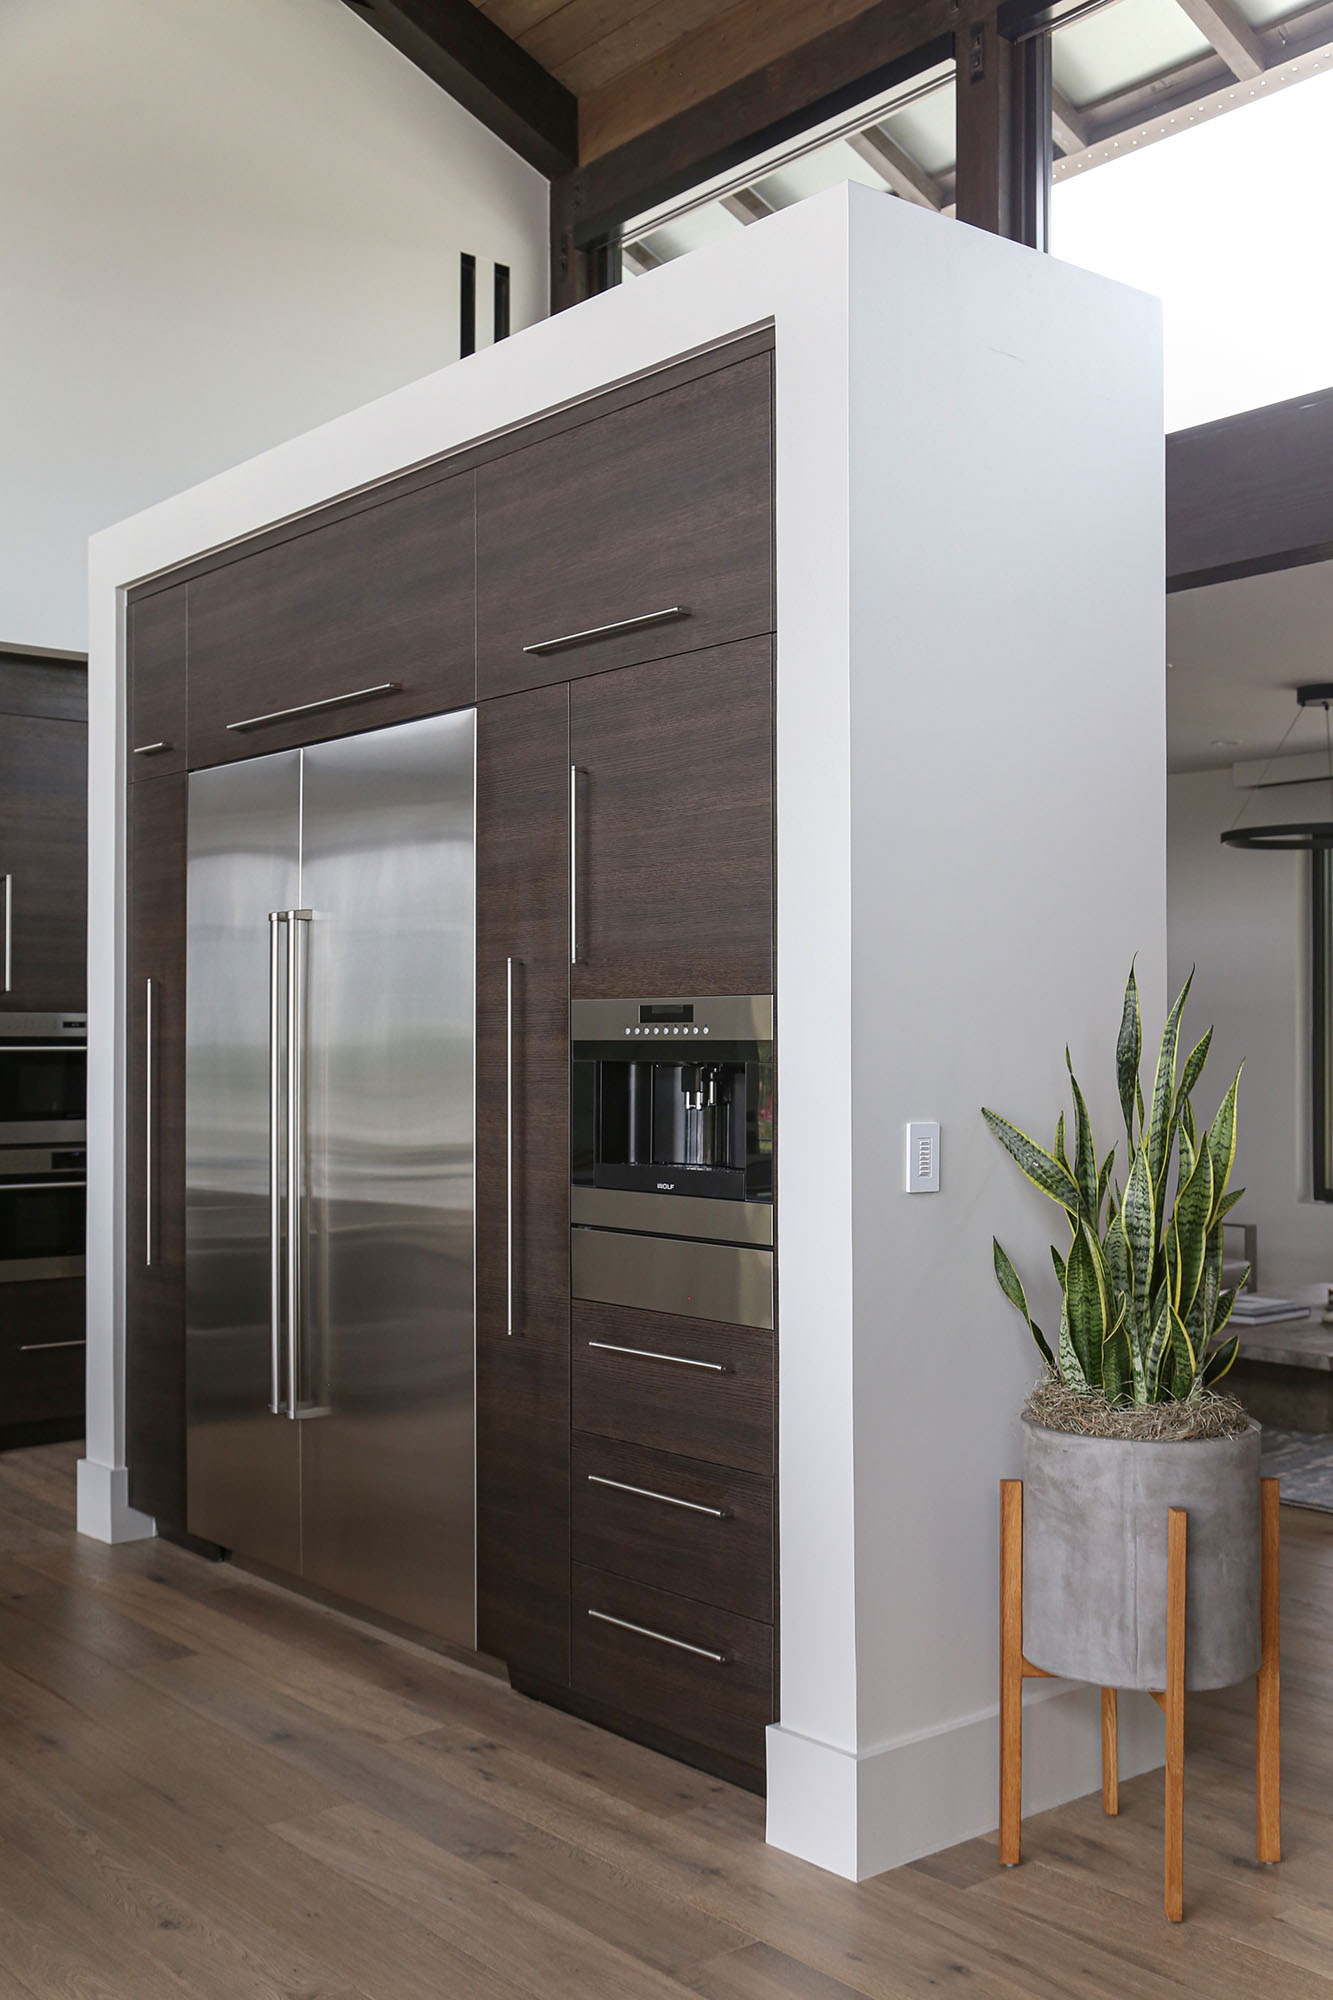 Tall Storage Cabinets Full Size Freezer Refrigerator Coffee Center Wood Floor Elite Cabinets Tulsa Kitchen Remodel